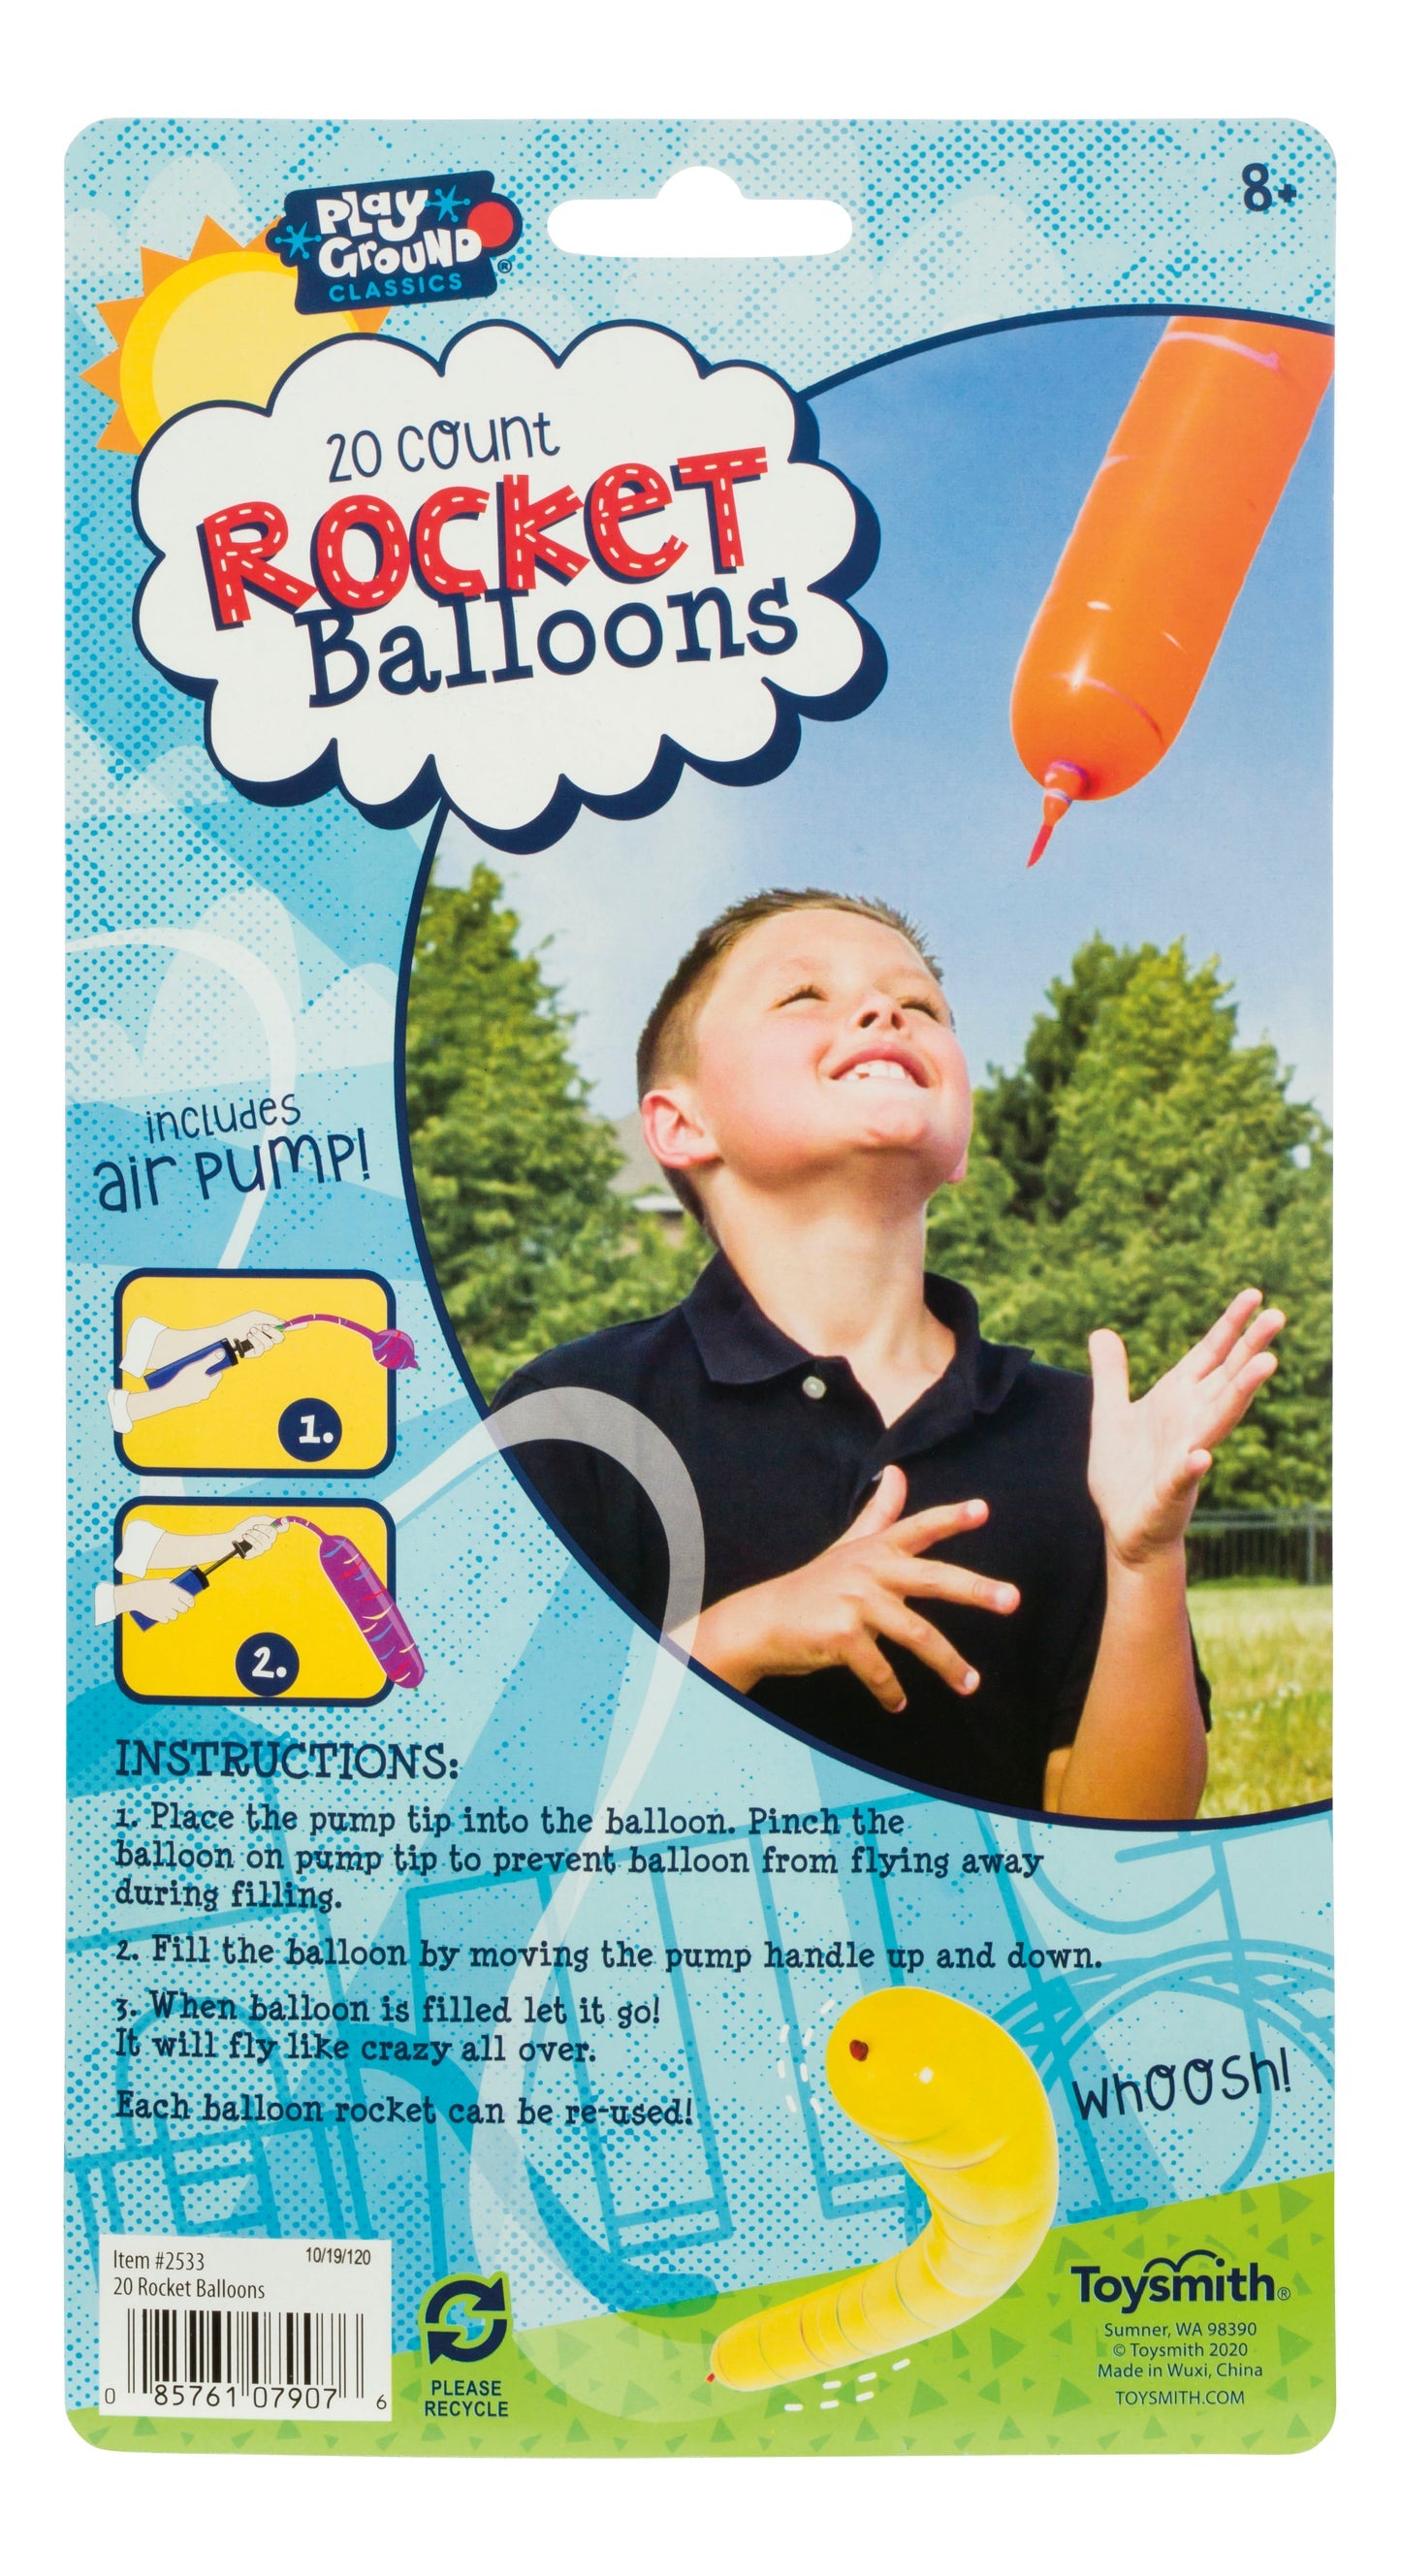 20 Count Rocket Balloons